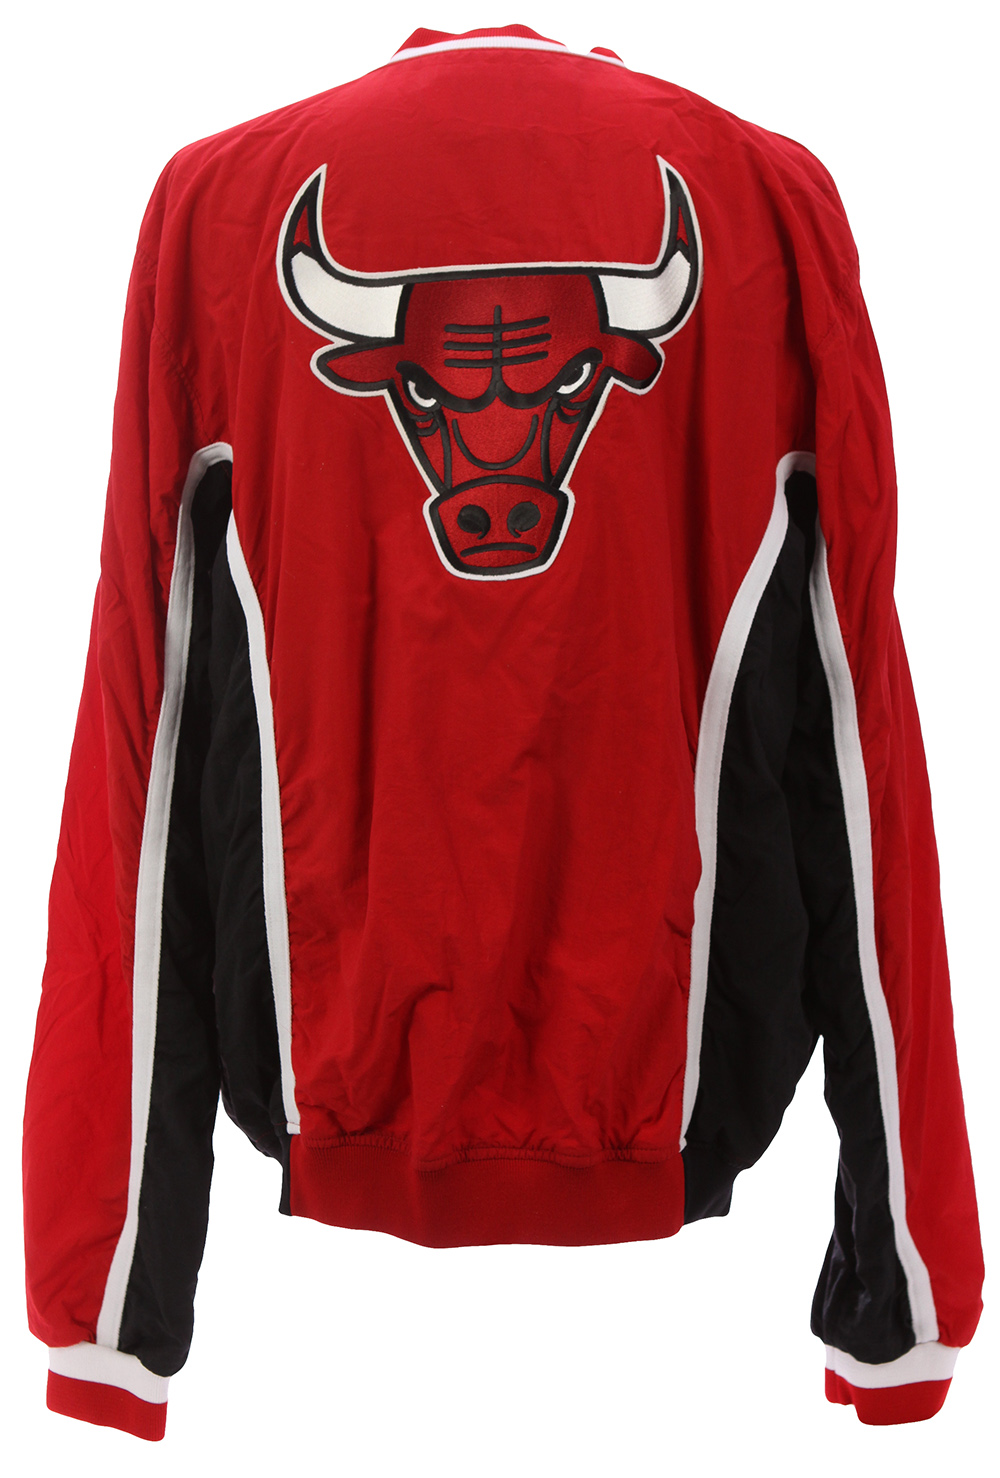 Lot Detail - 1996-1997 circa Chicago Bulls Warm Up Jacket